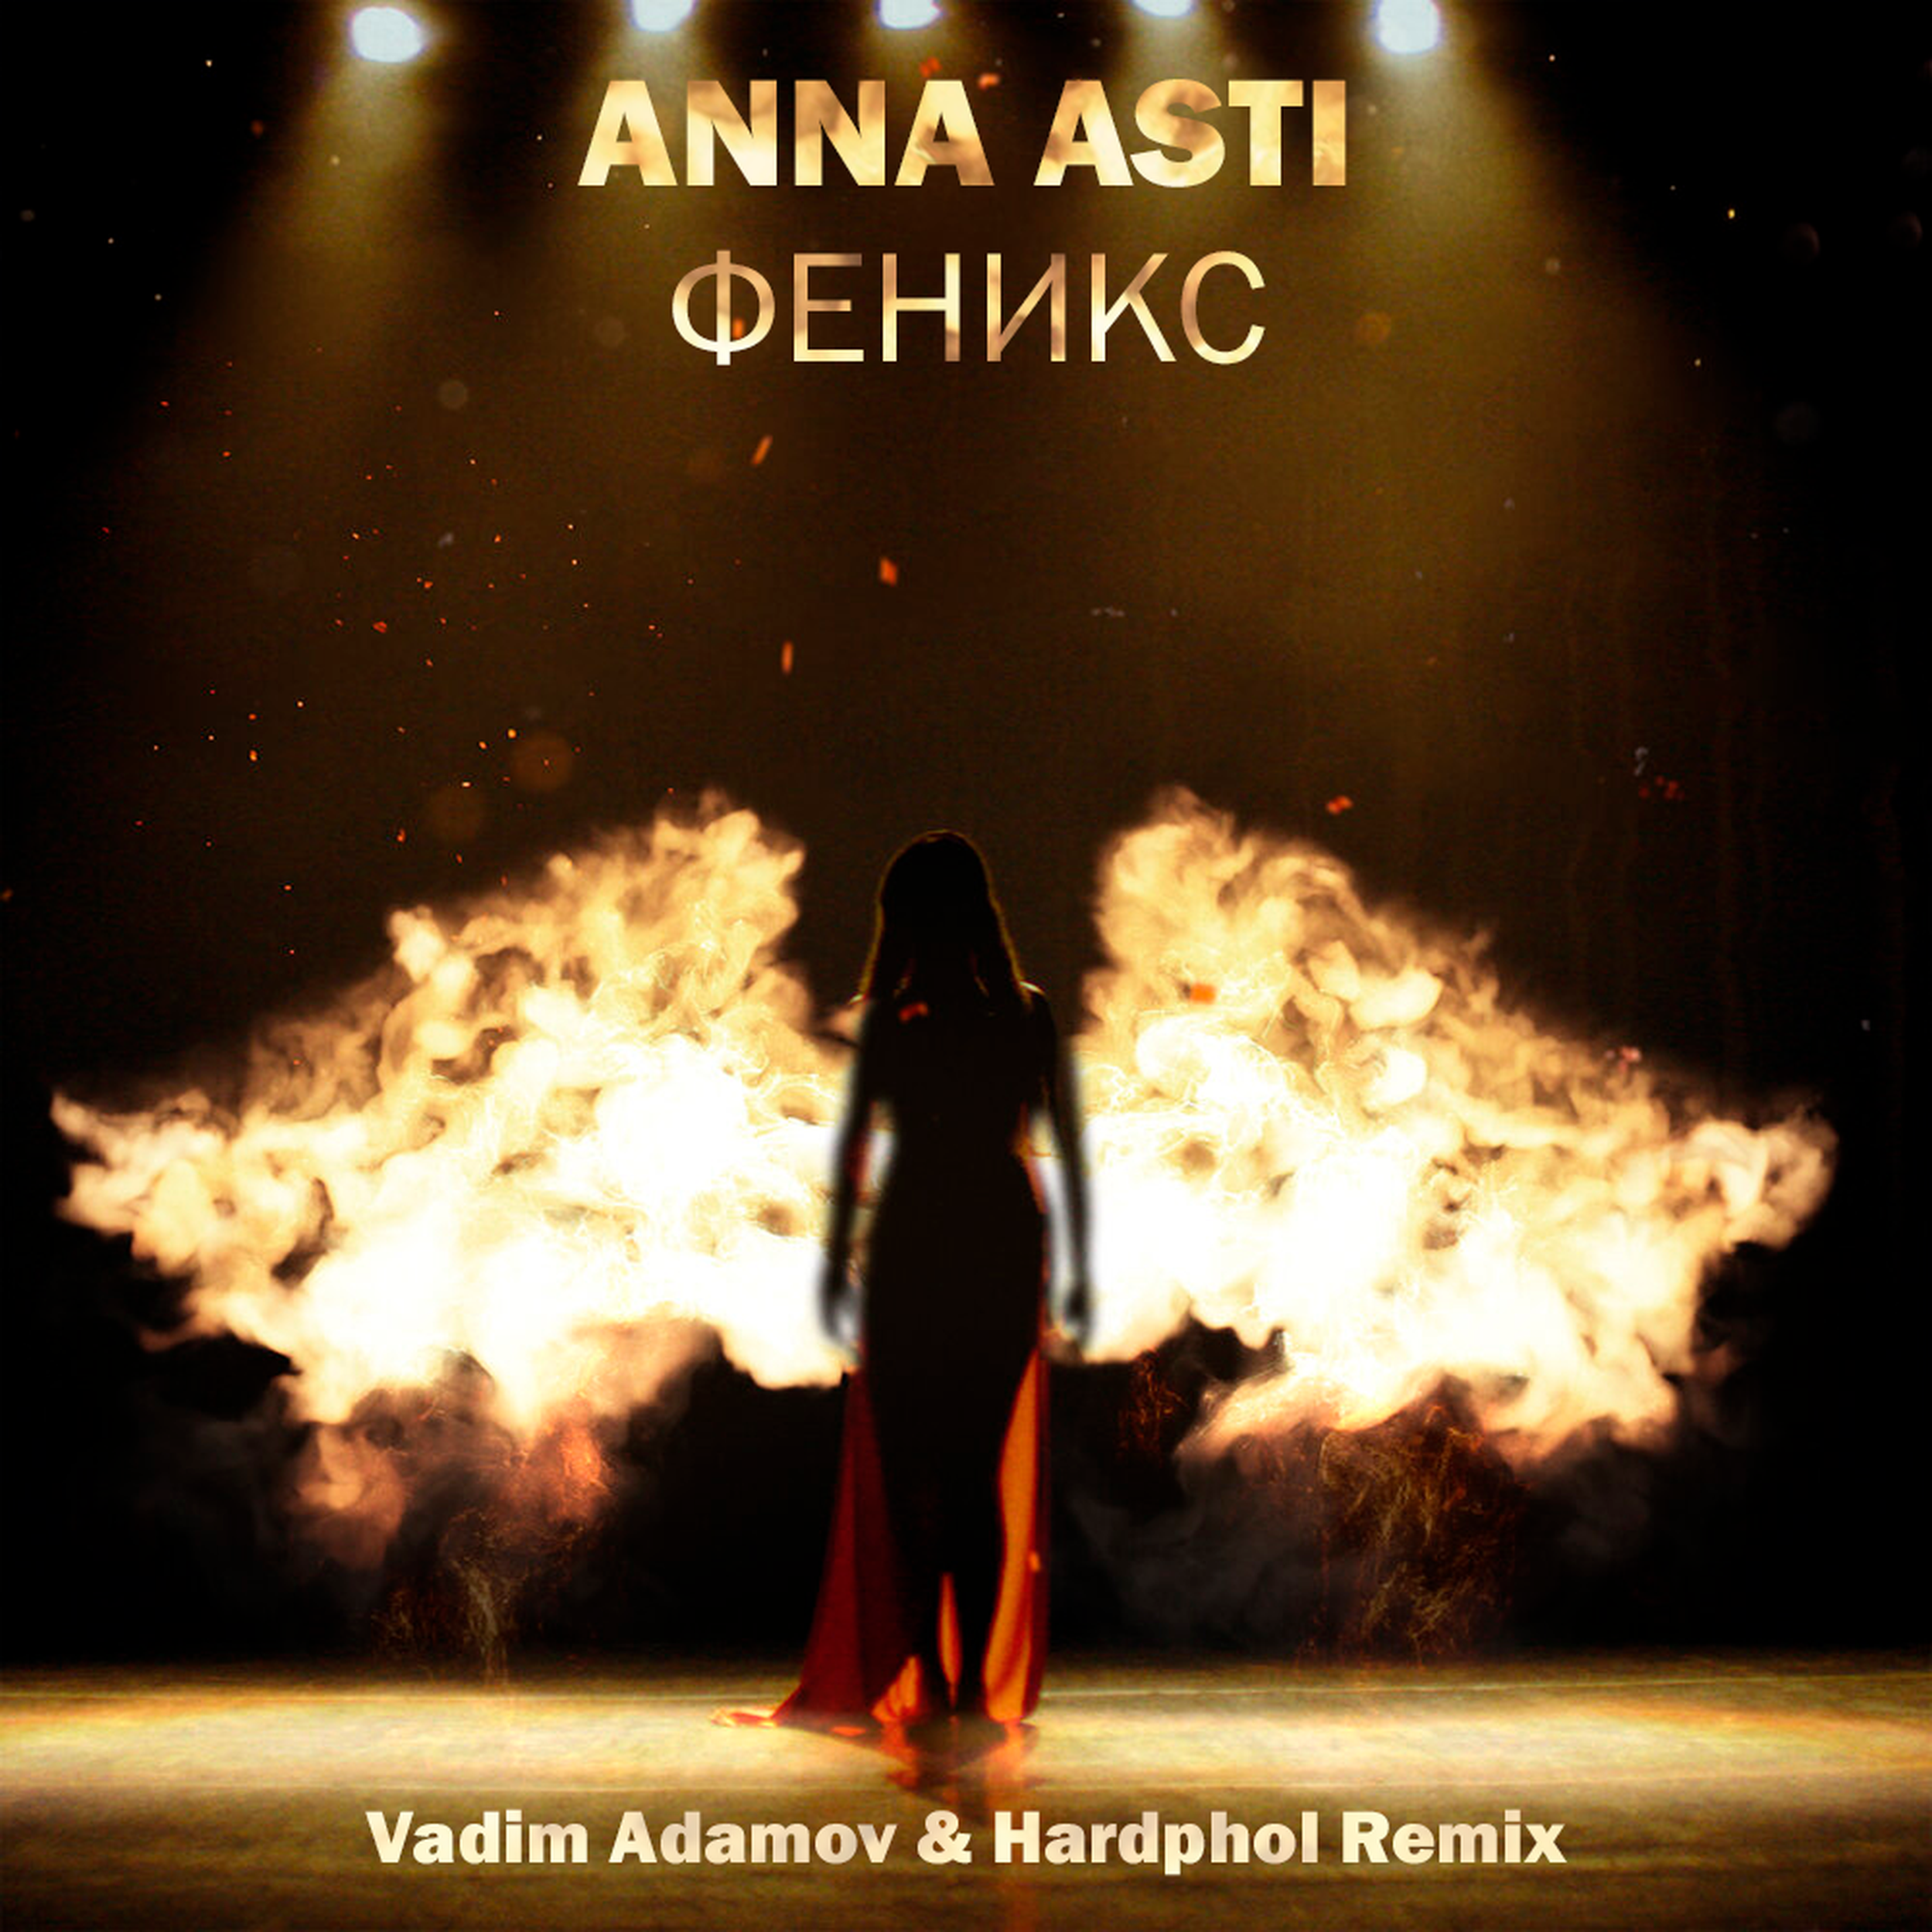 Клип феникс. Феникс Anna Asti. Anna Asti - Феникс (2022).